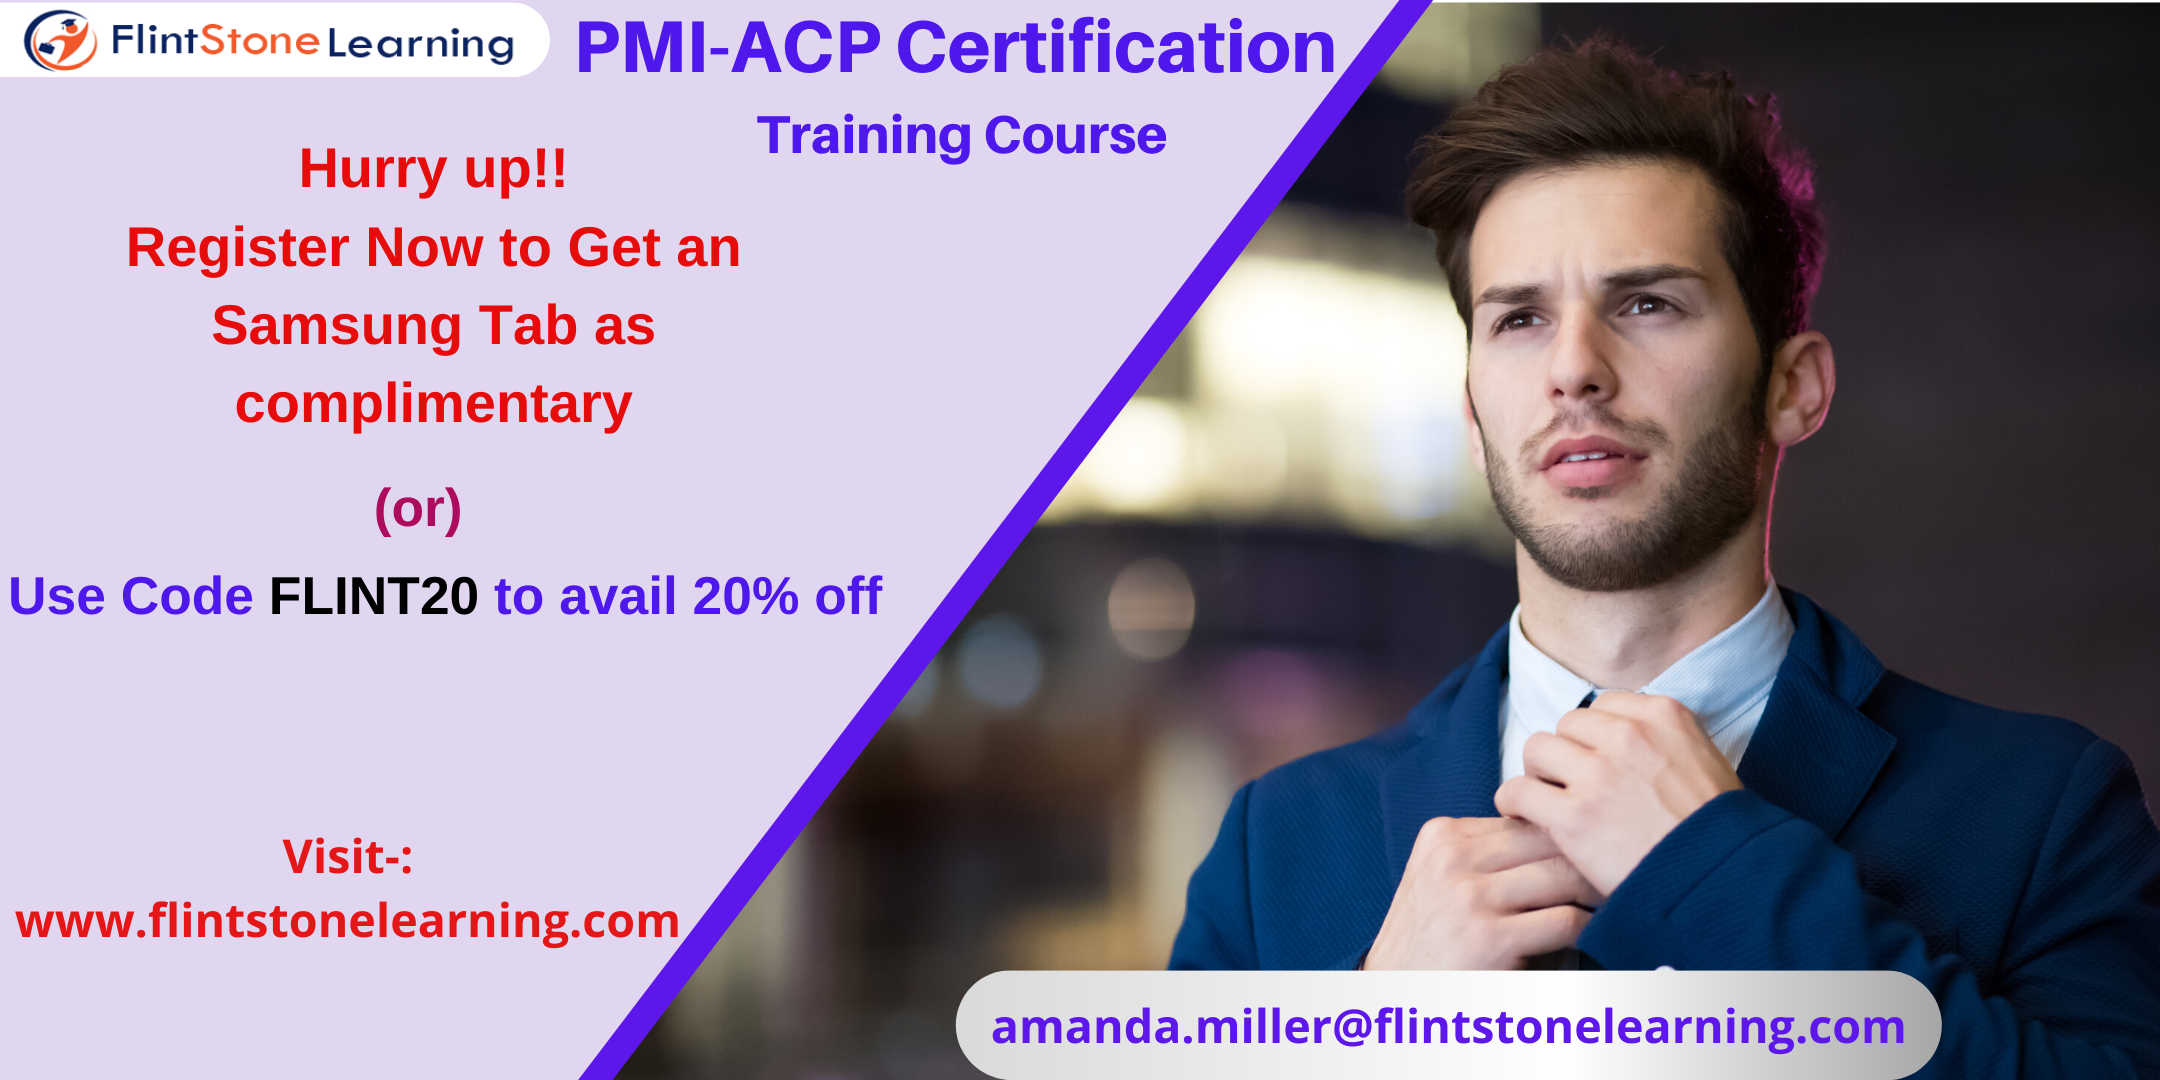 PMI-ACP Certification Training Course in Edinburg, TX